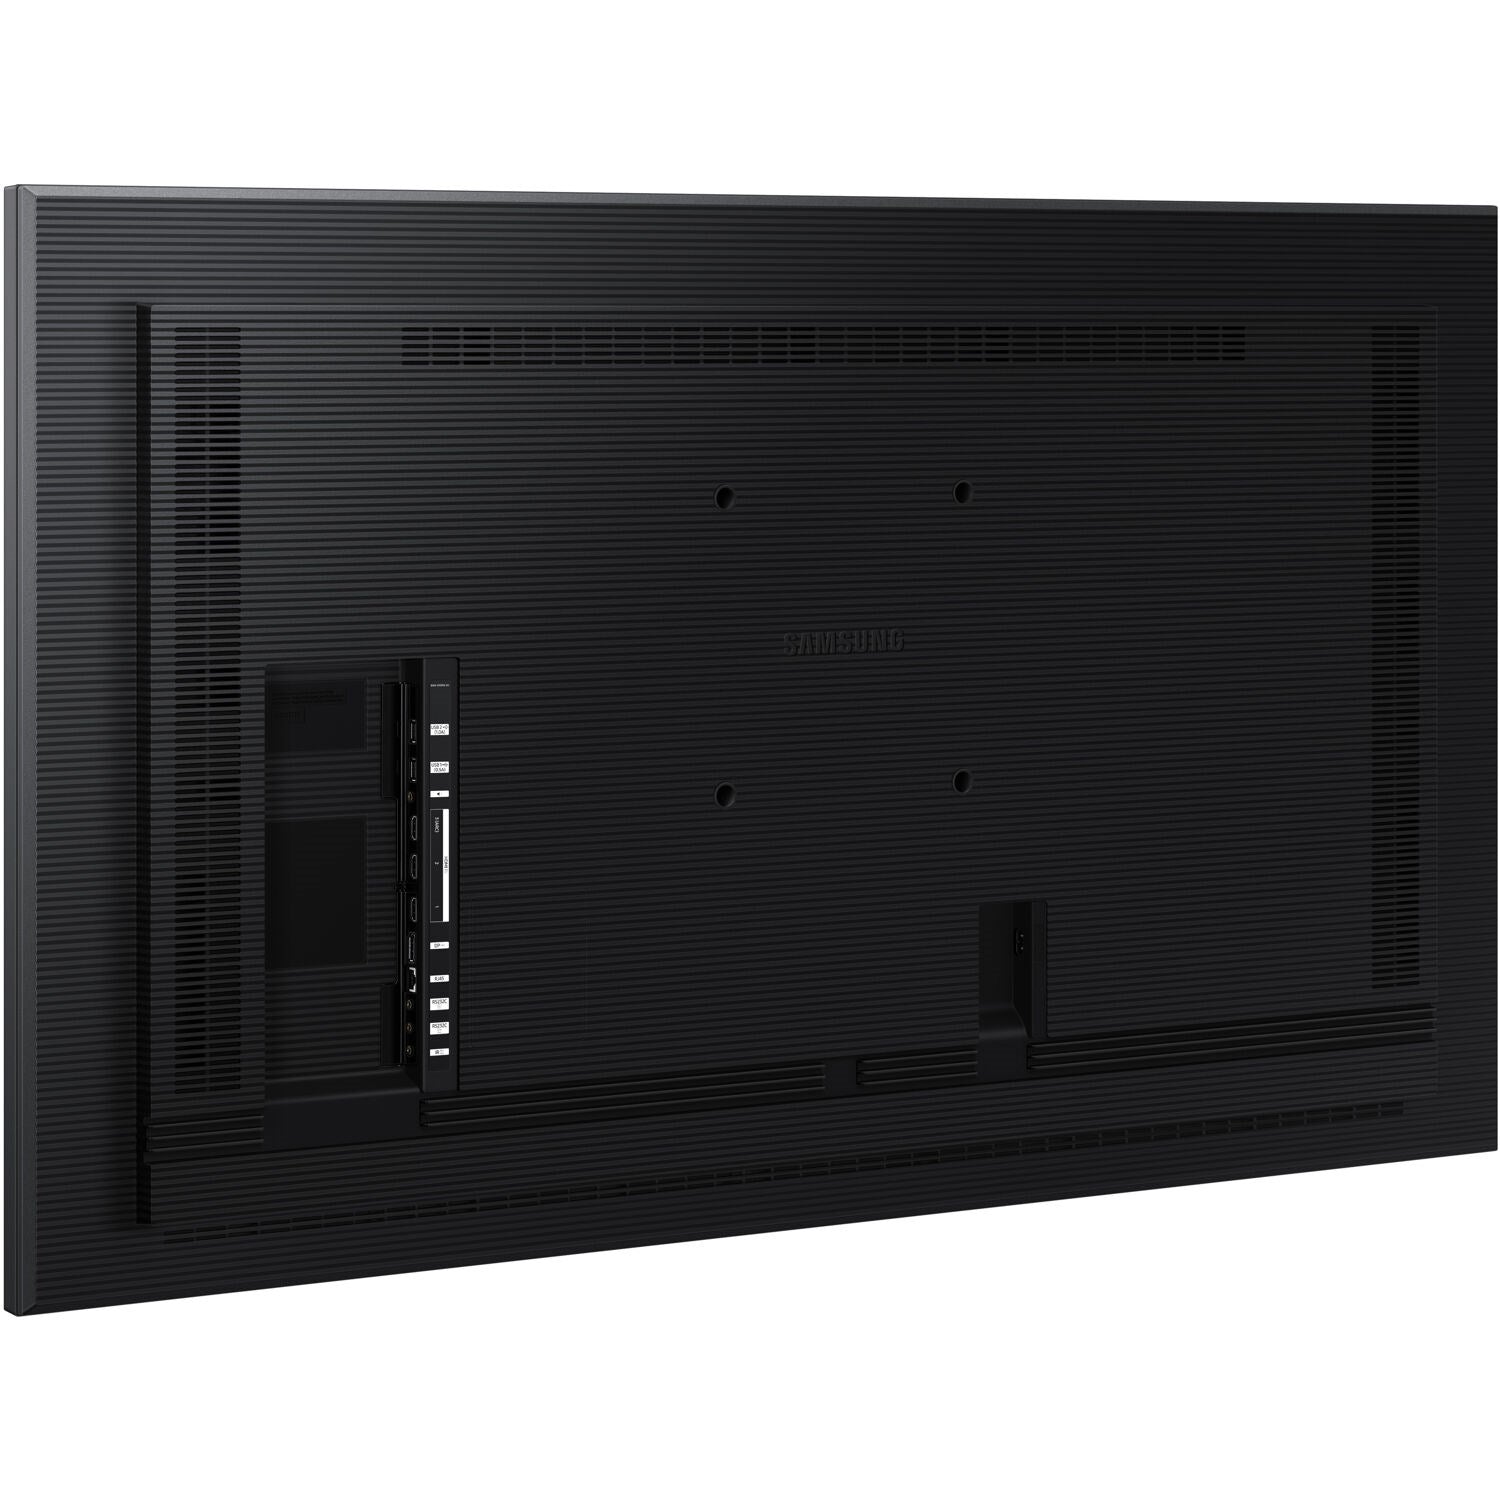 Samsung - 55"3840x2160 4K UHD LED LCD Display, 500 nit 24/7 - Black